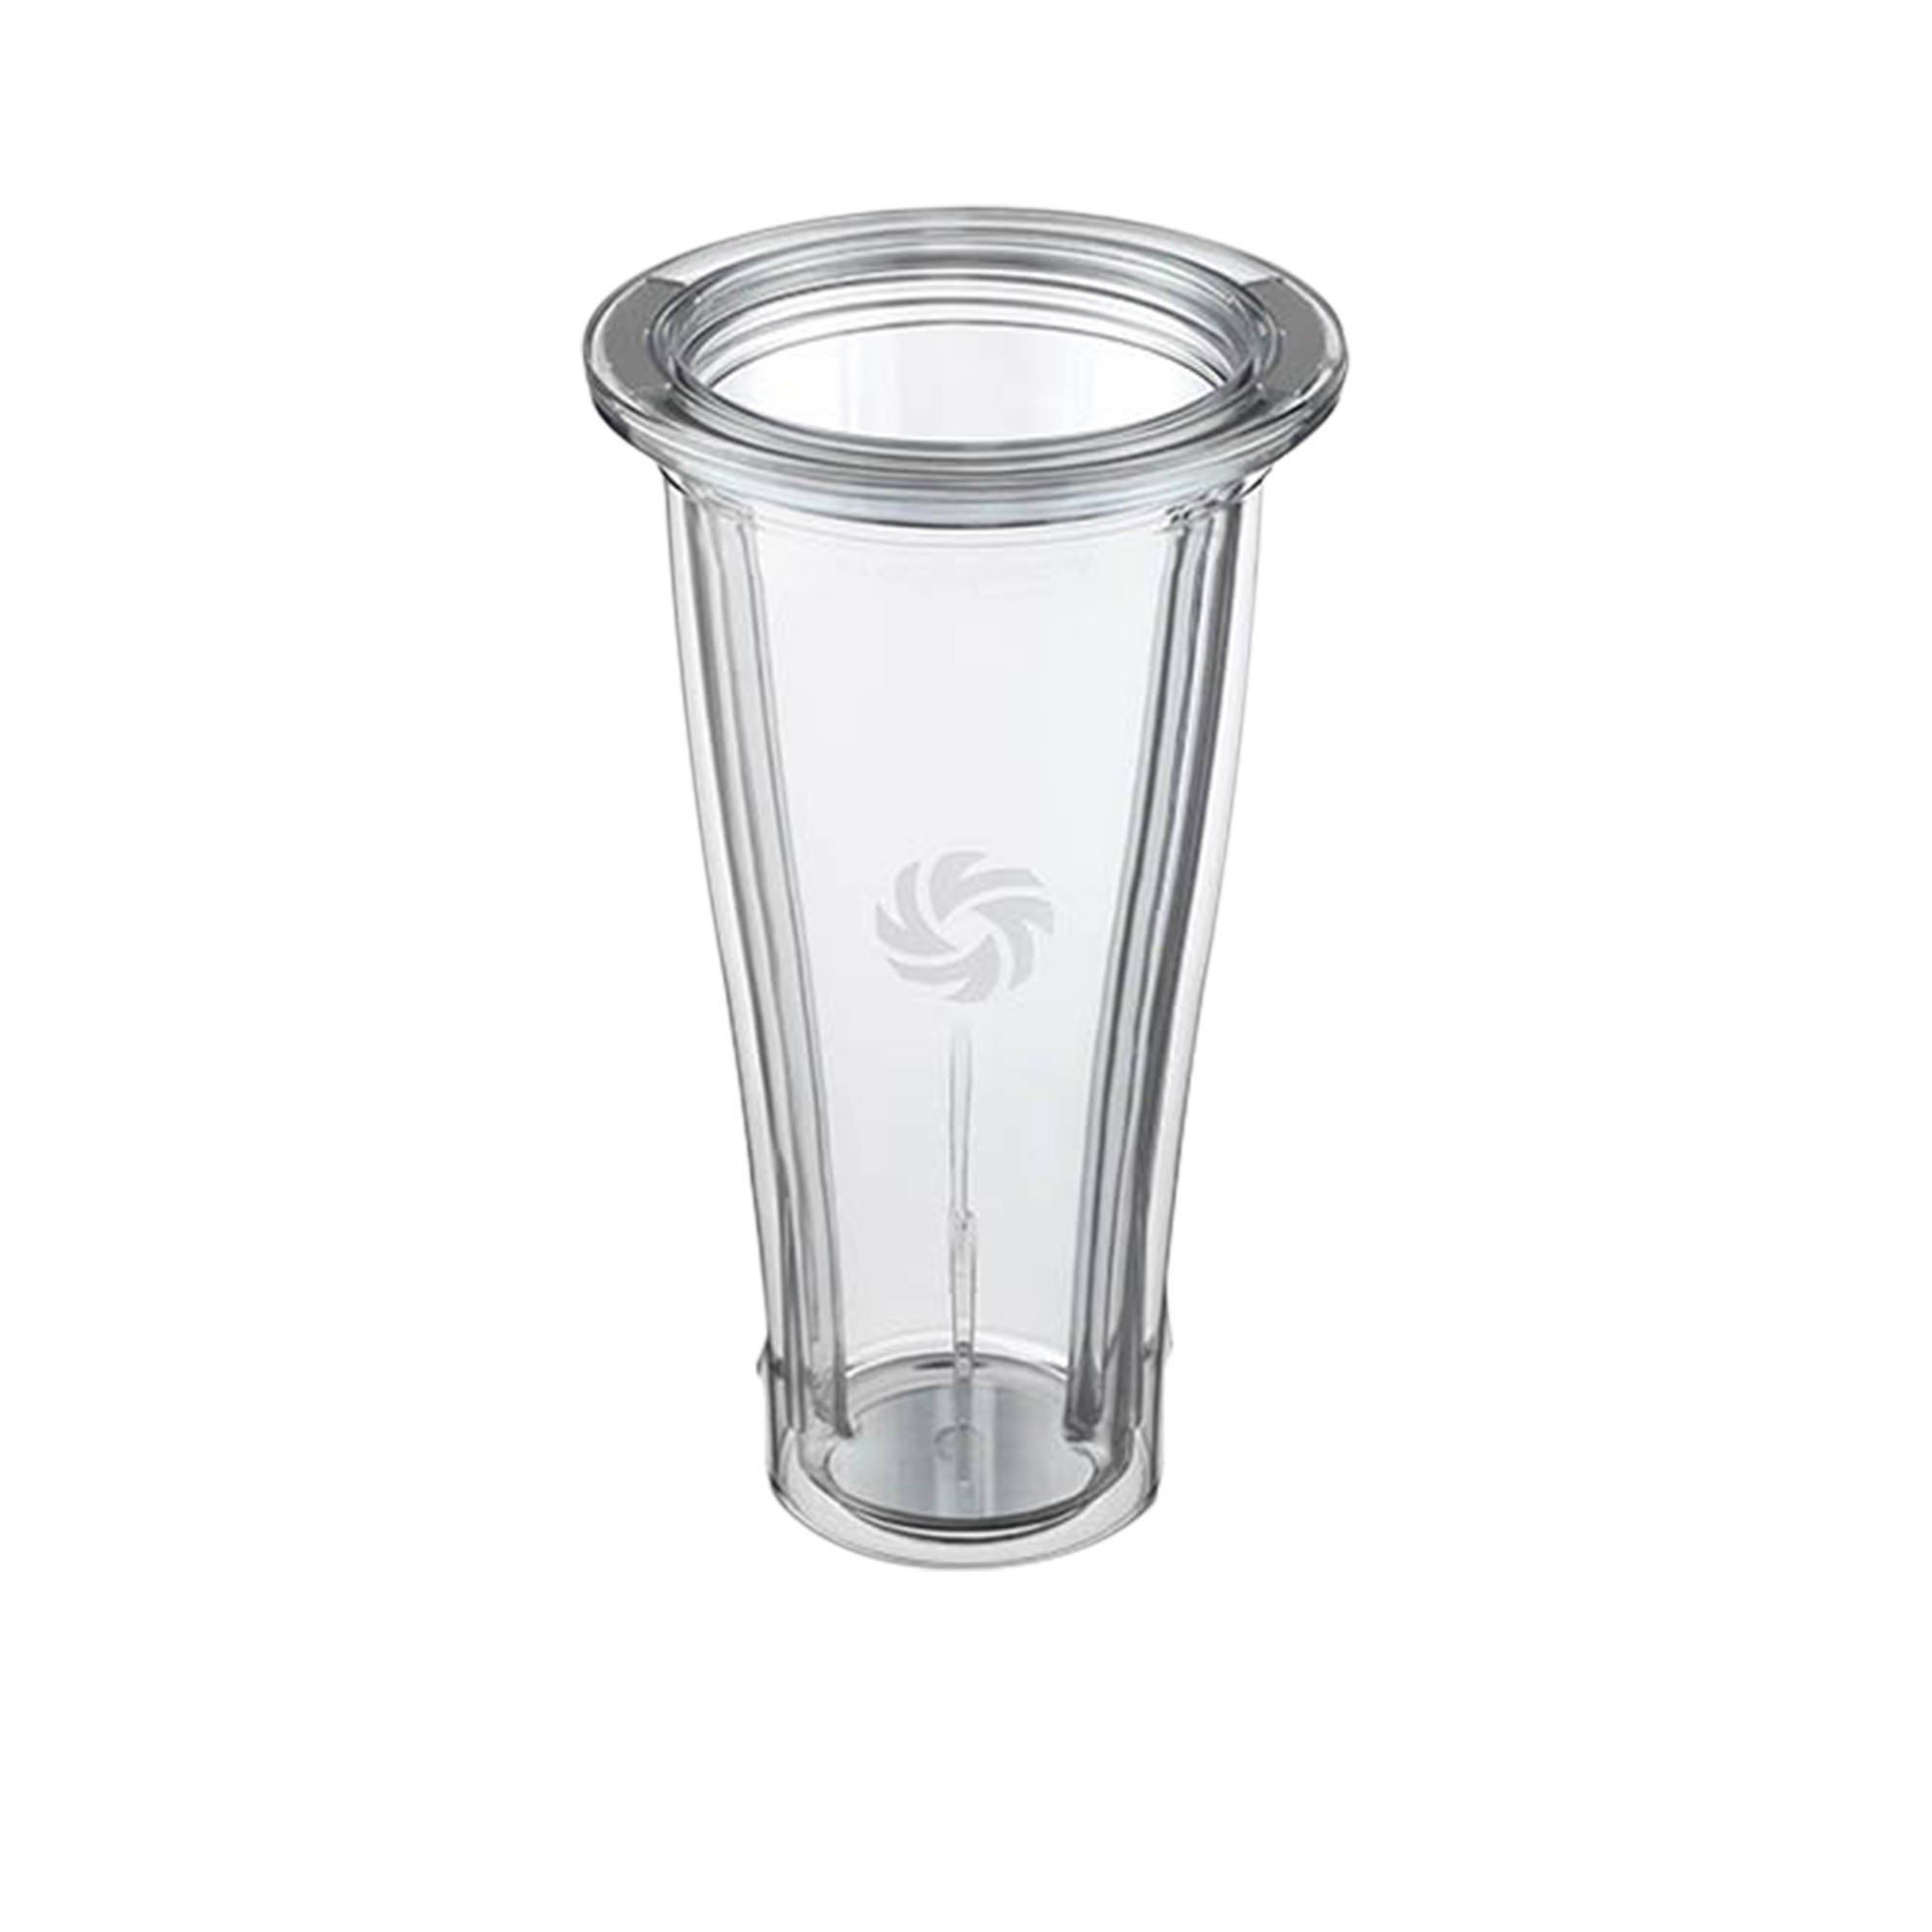 Vitamix Ascent Series Blending Cup 600ml Image 2